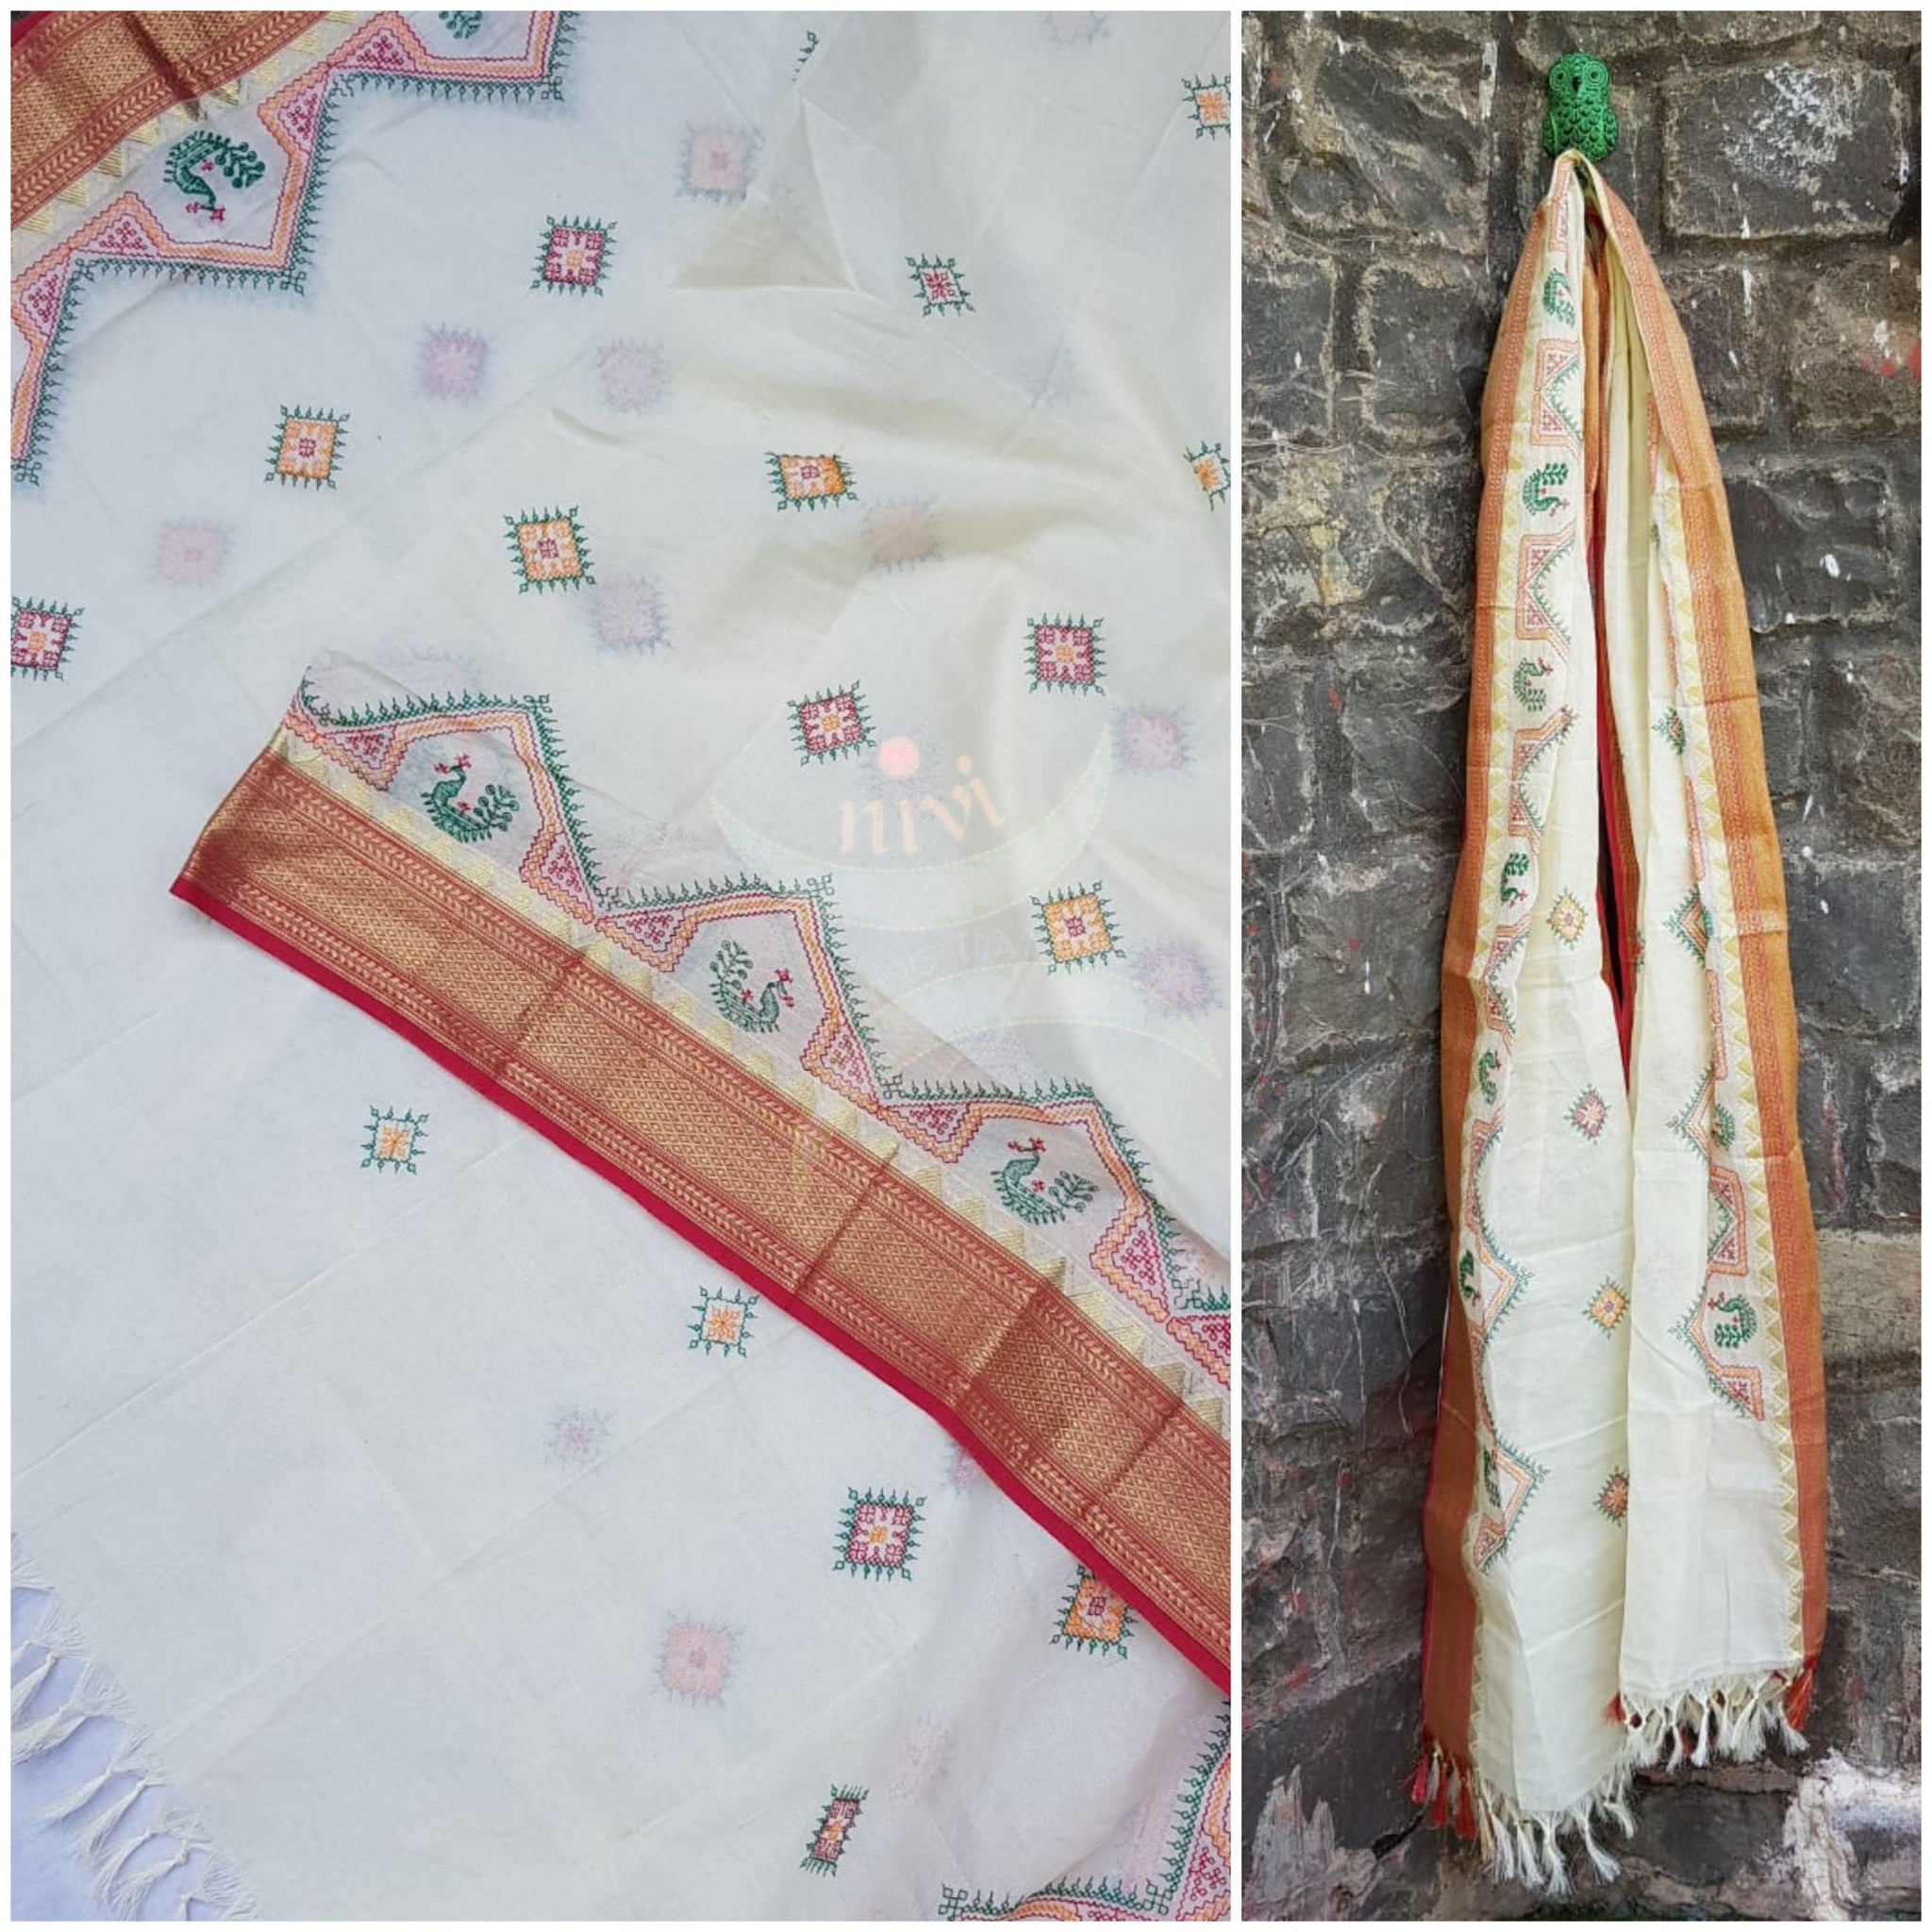 Off white kota cotton dupatta with traditional kasuti embroidery